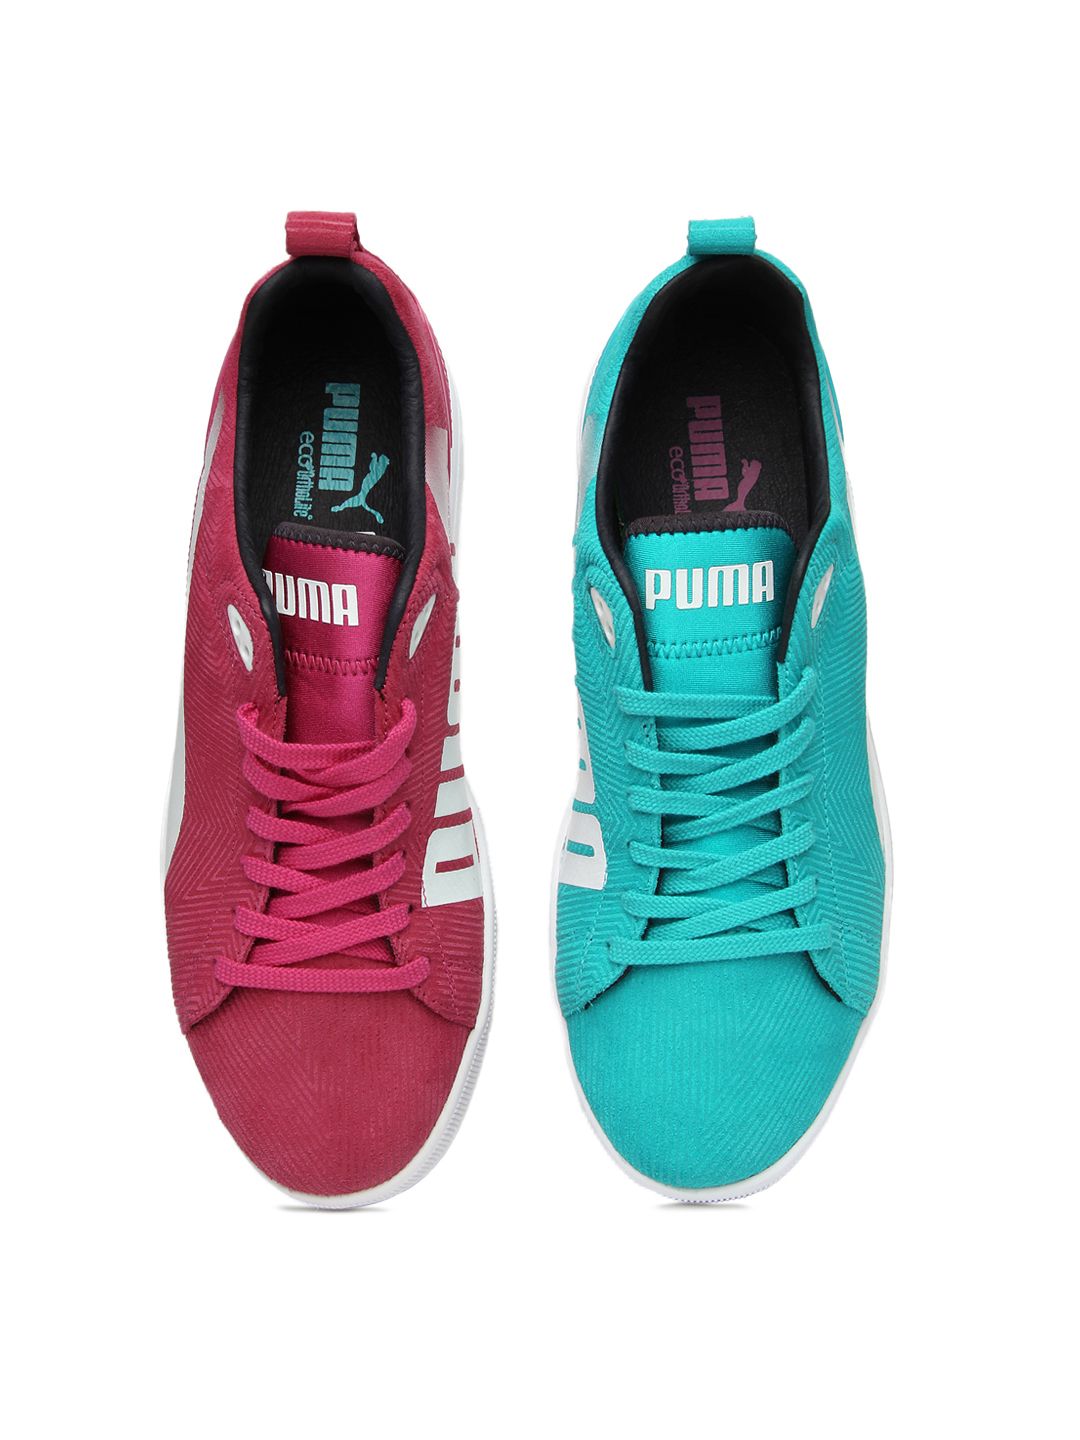 puma multicolor shoes